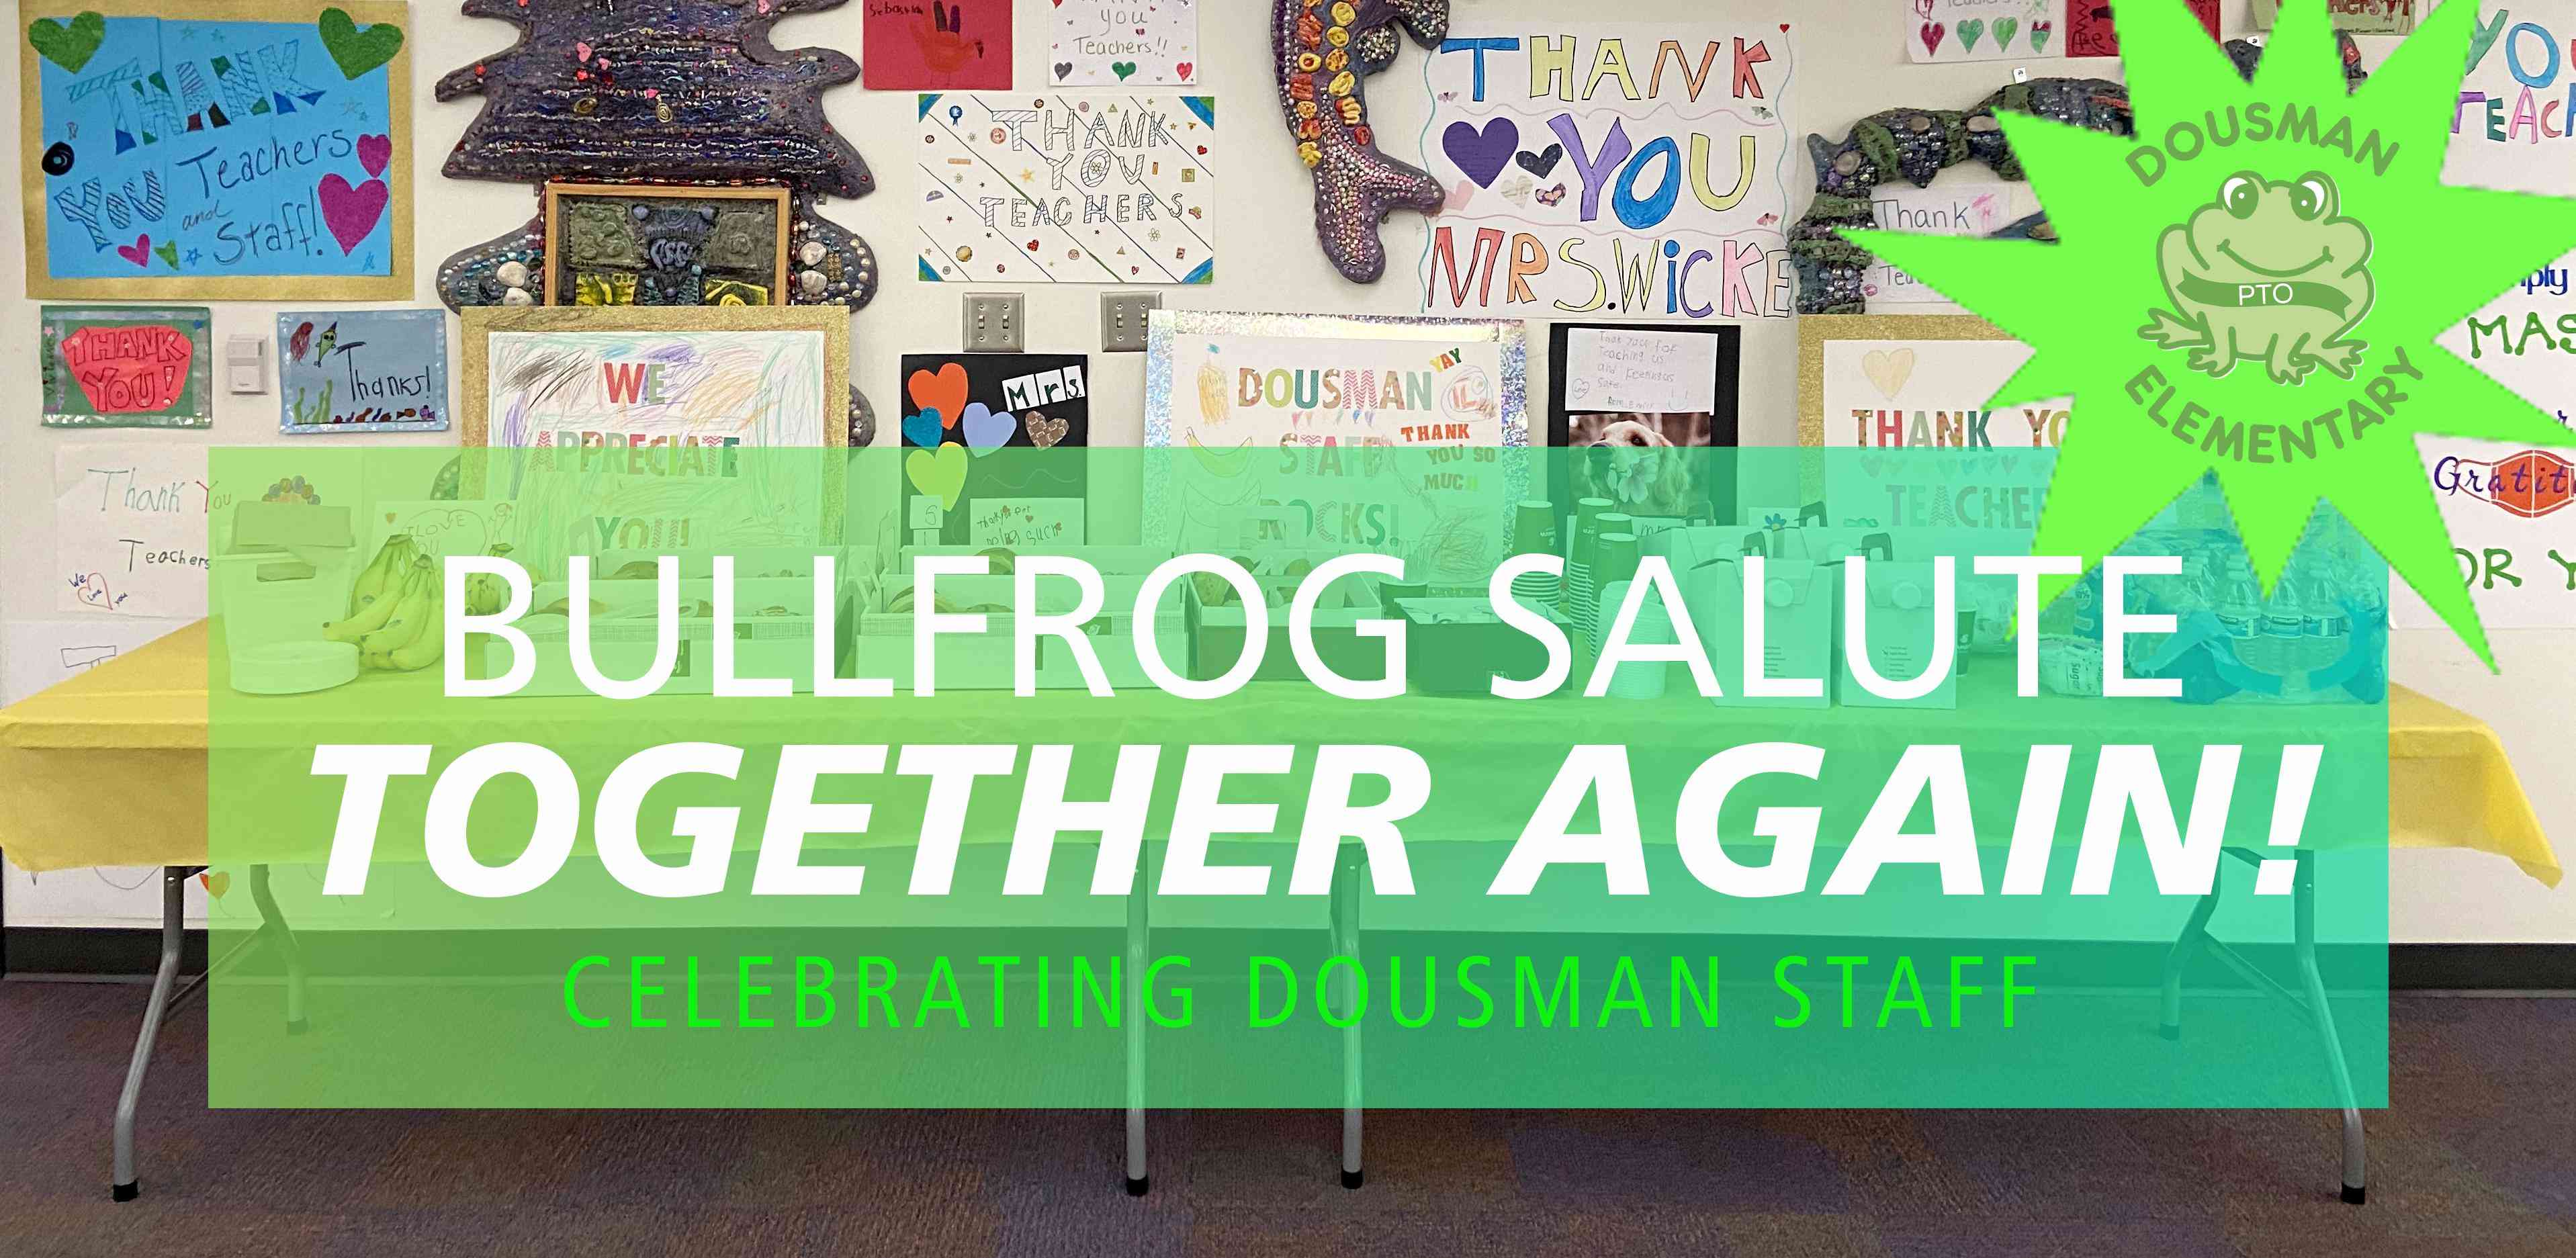 Bullfrog Salute: Together Again! Image